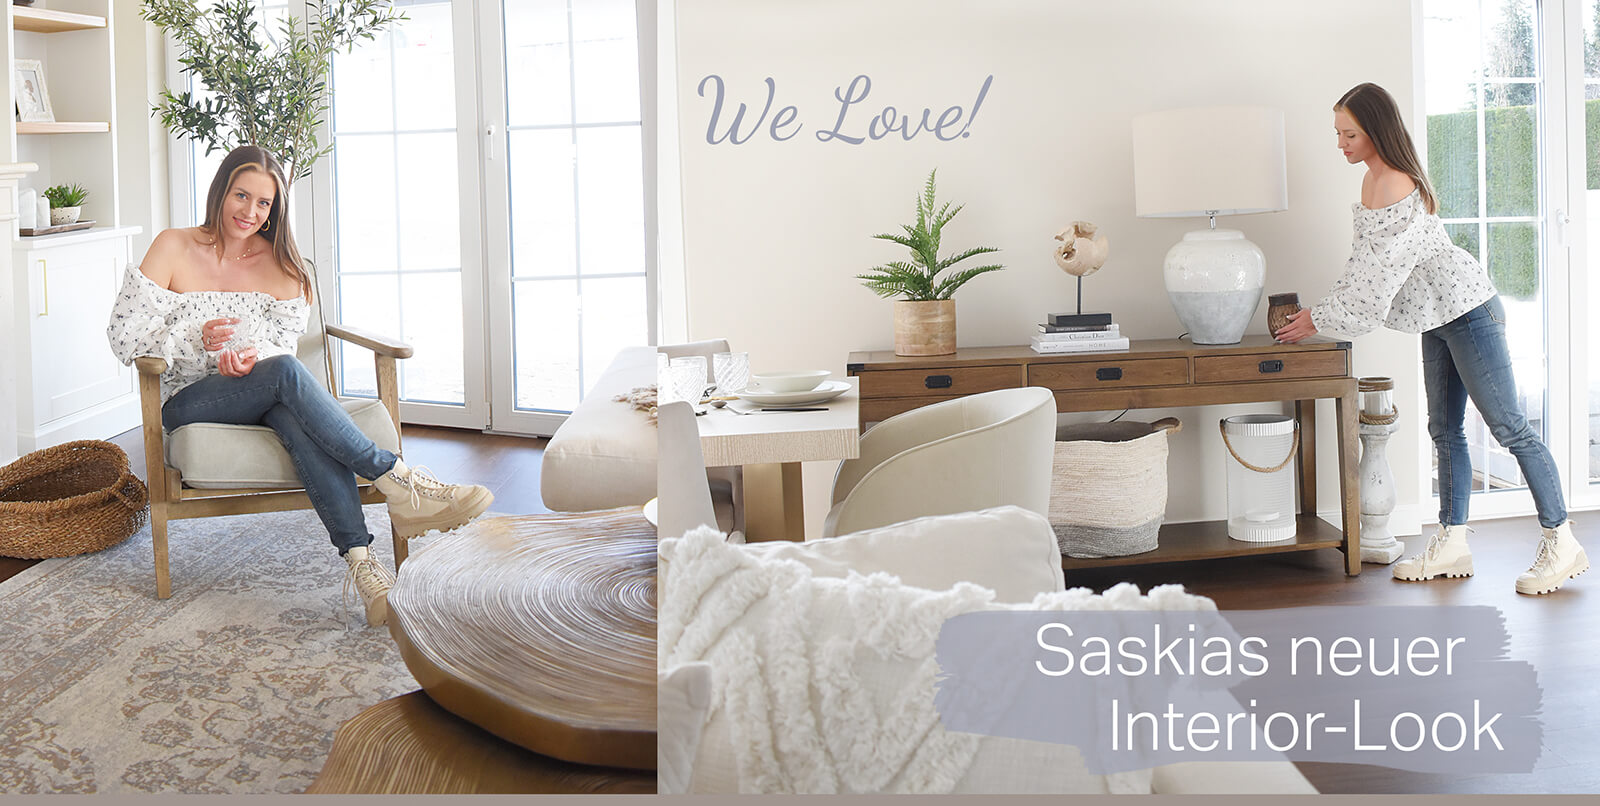 Pre-Sale: Saskiasfamilyblog's neuer Interior-Look